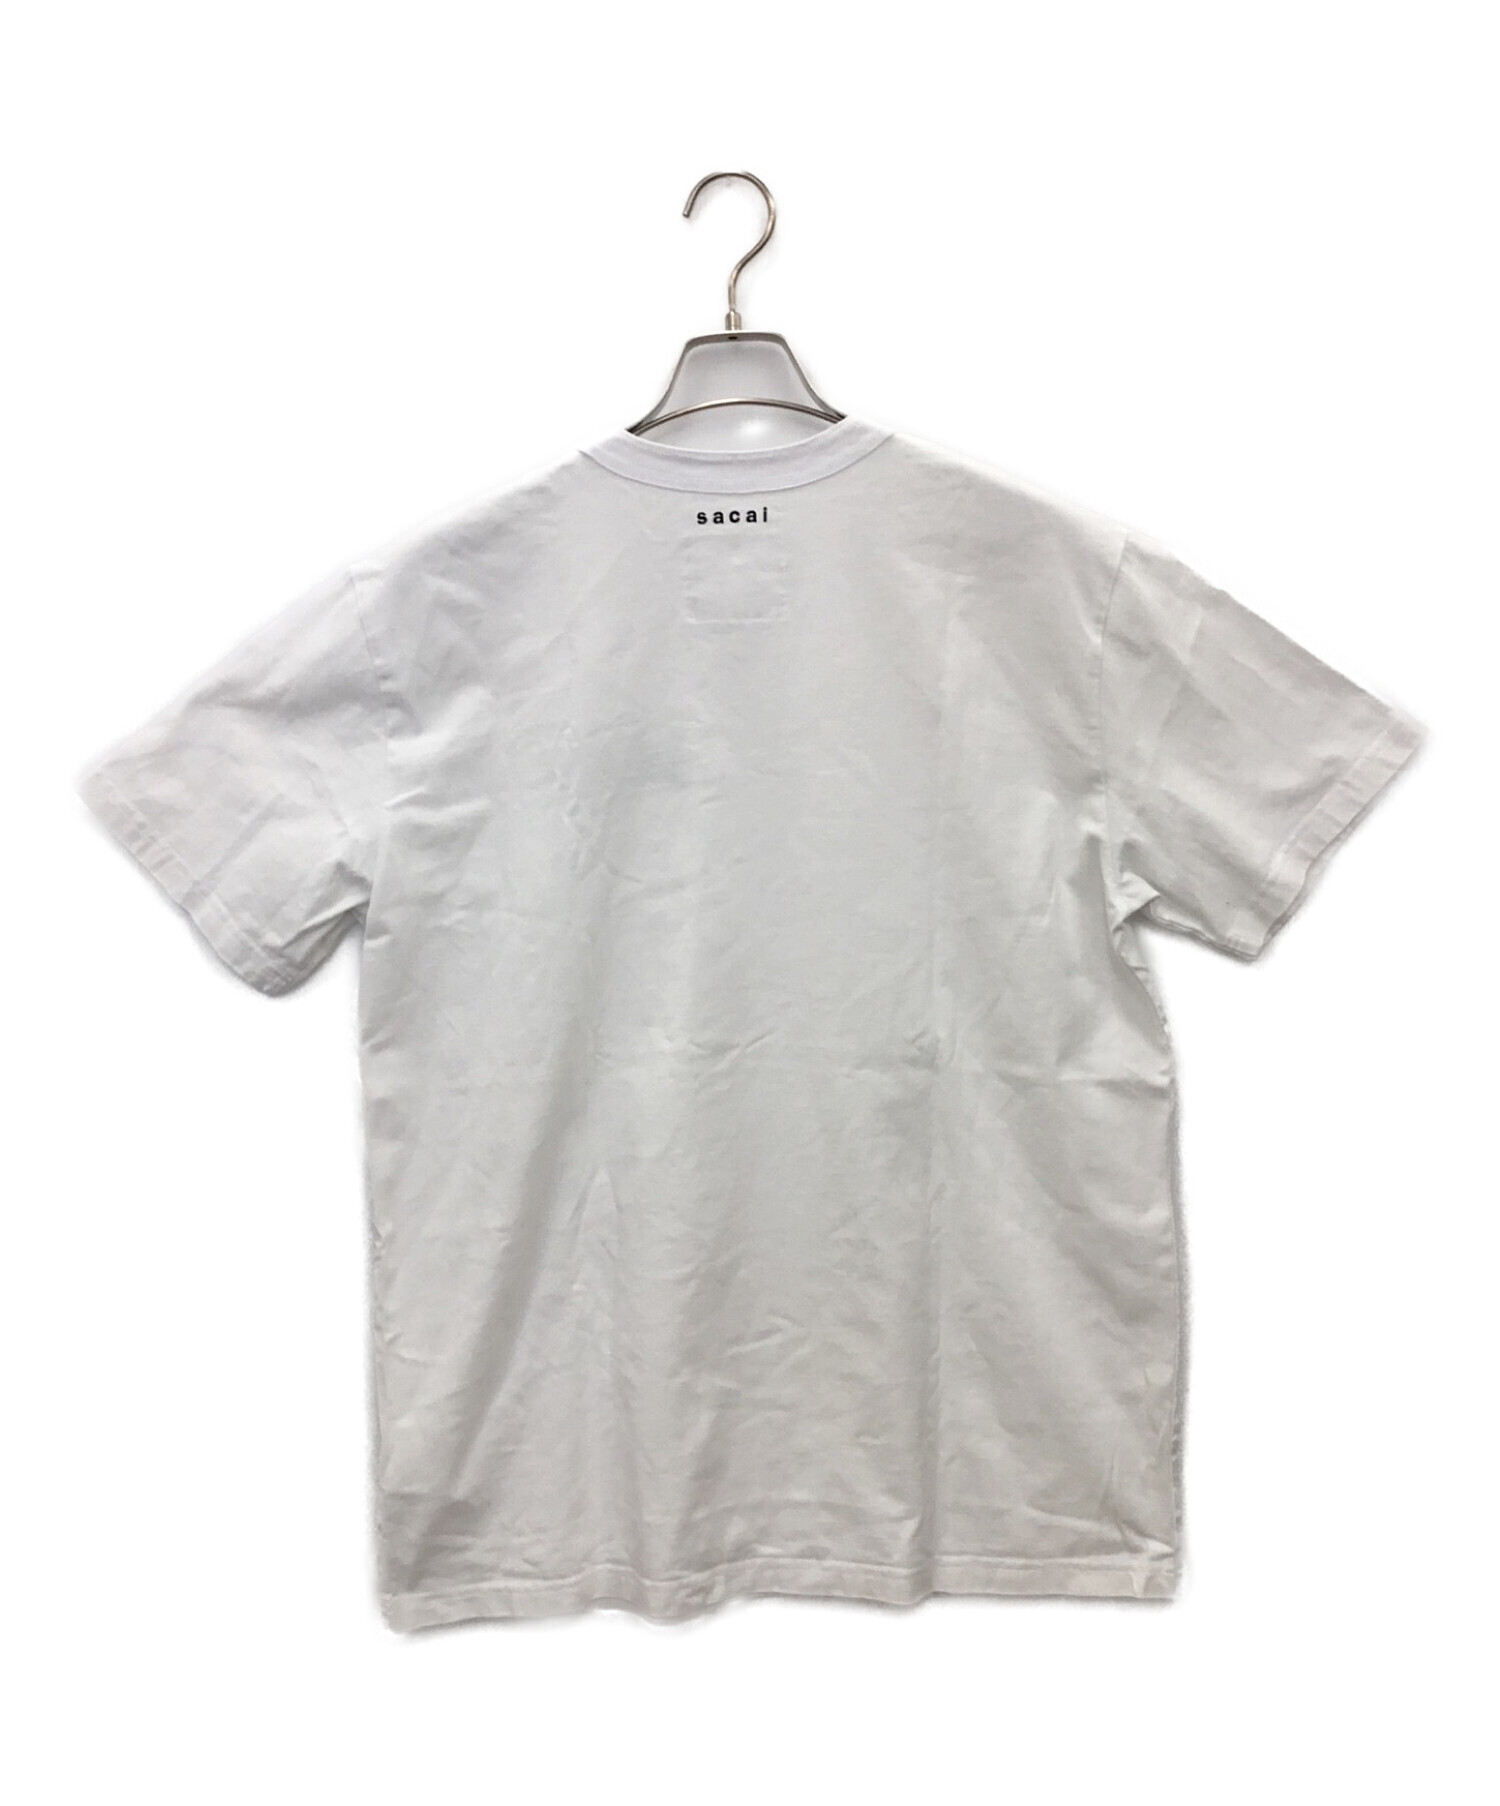 Sacai×KAWS (サカイ×カウズ) Tシャツ ホワイト サイズ:3